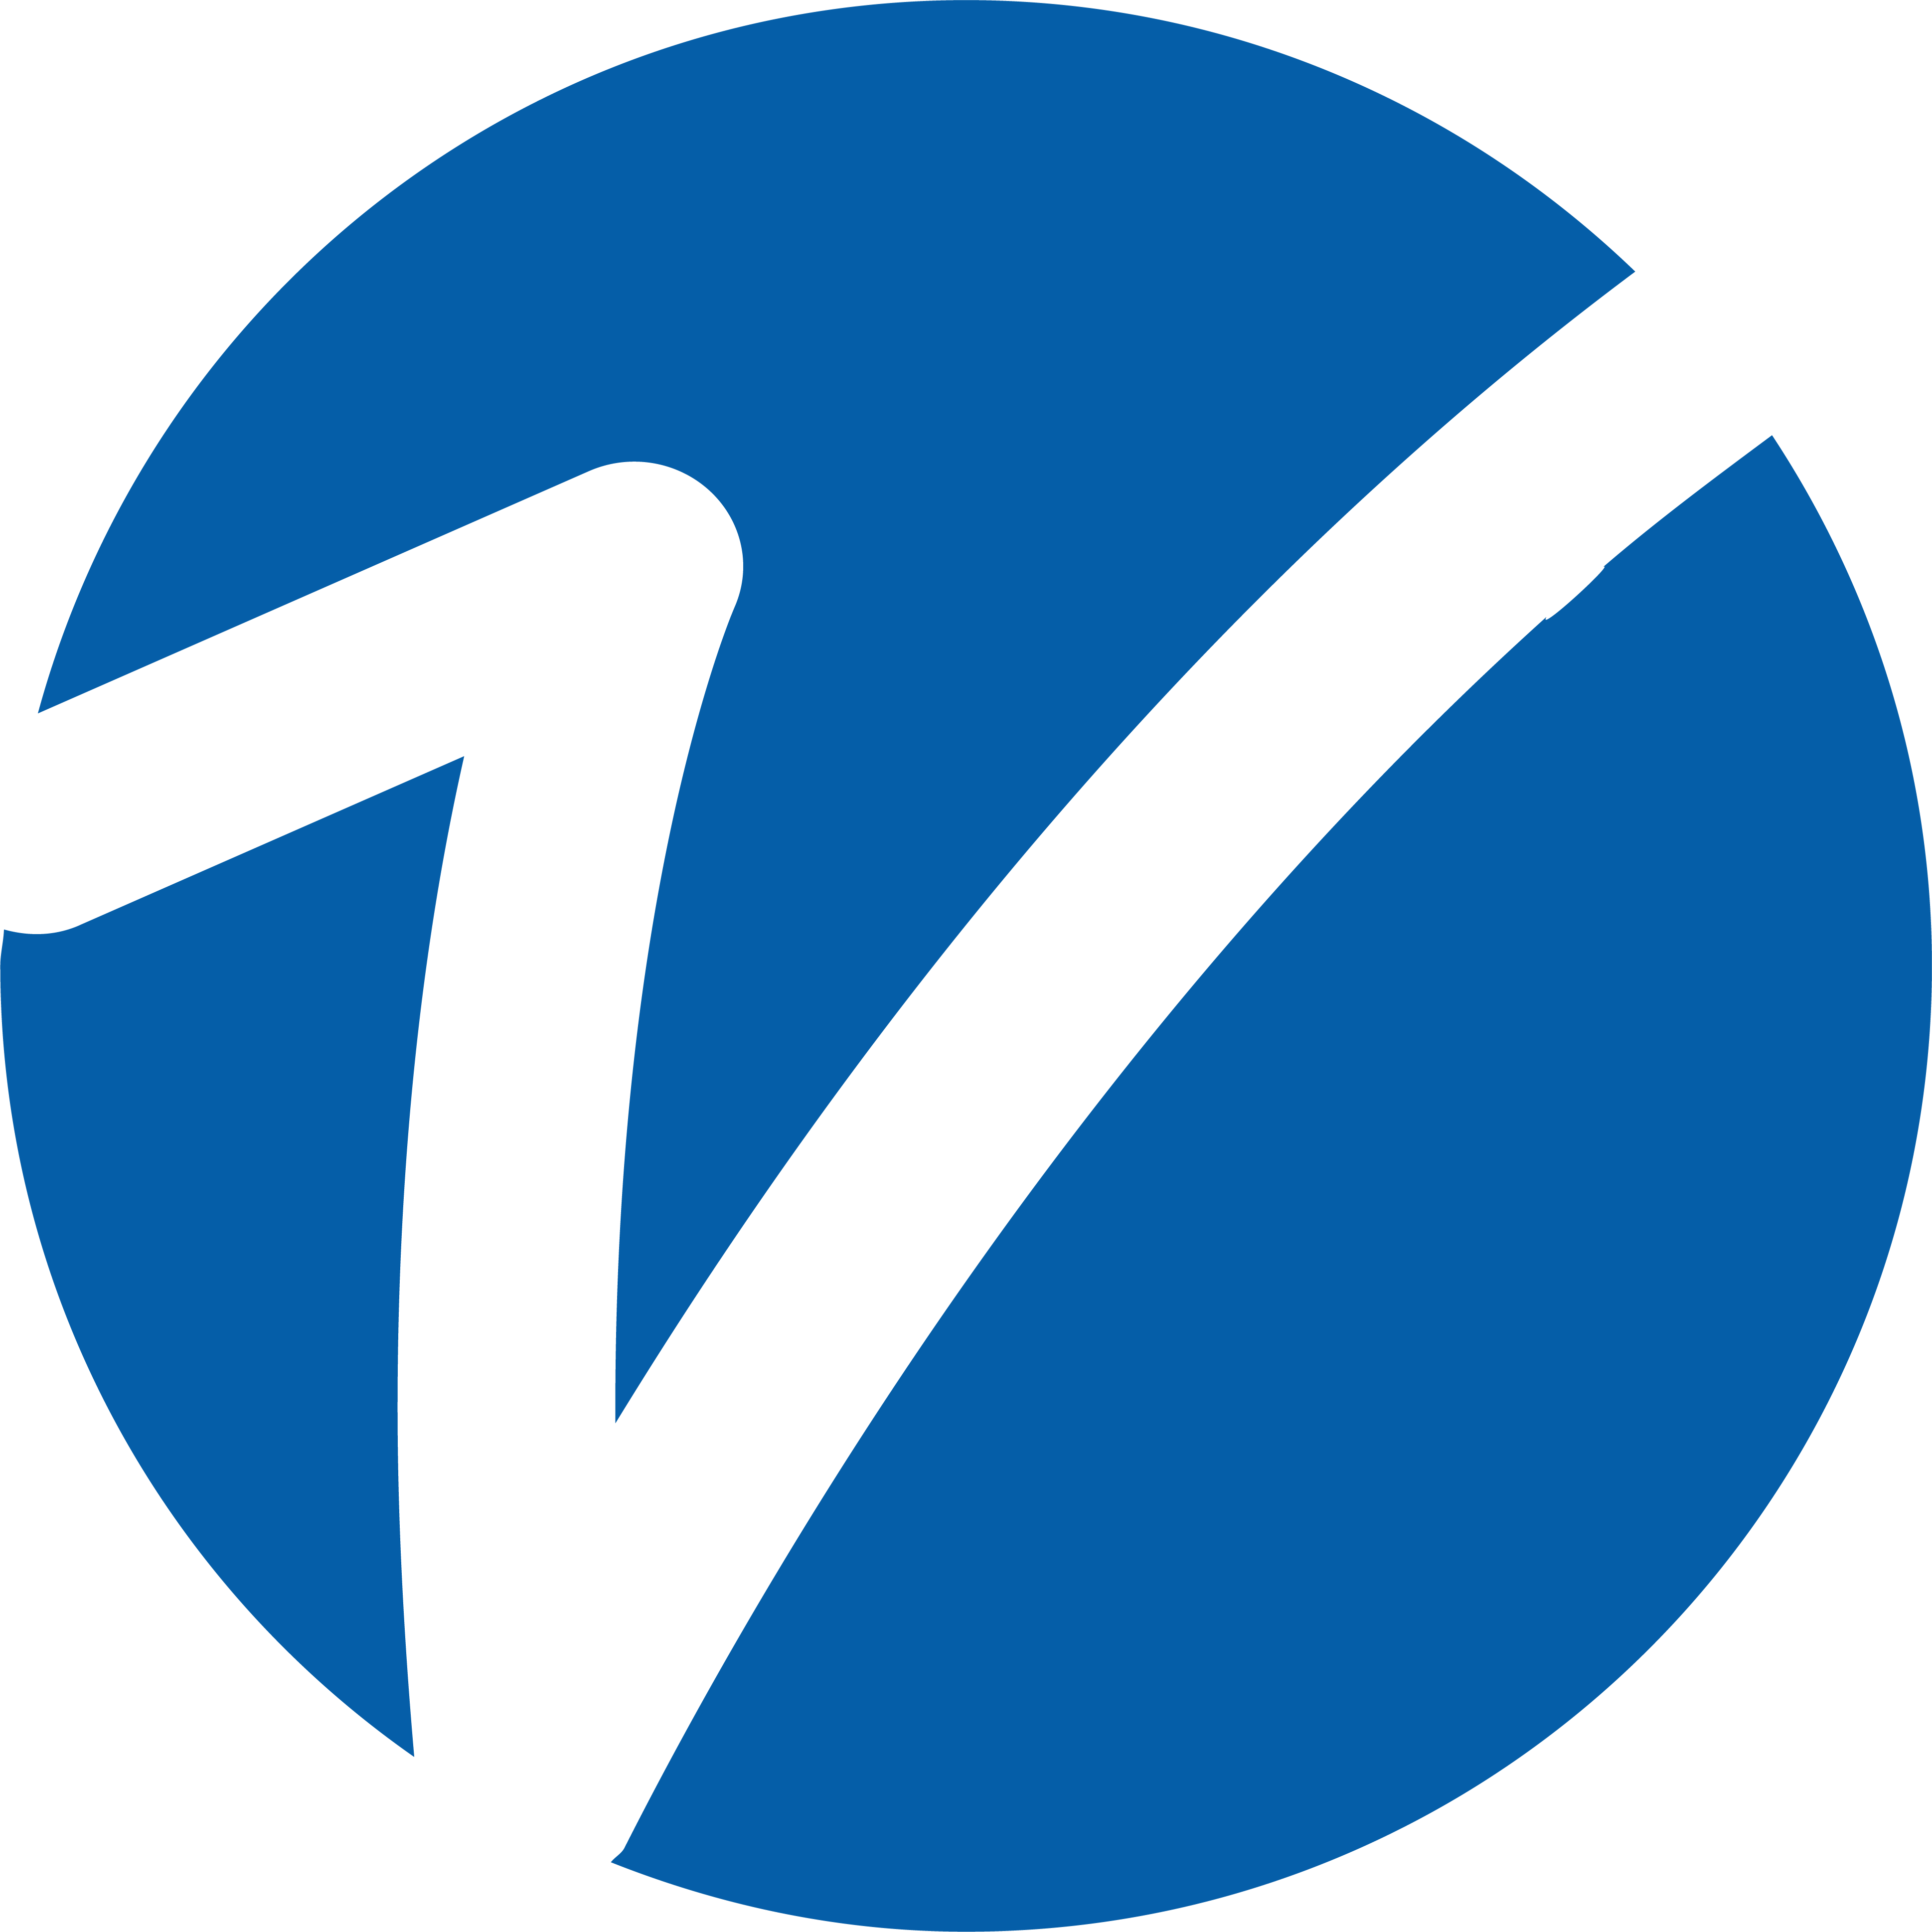 Visalia Unified School District Logo